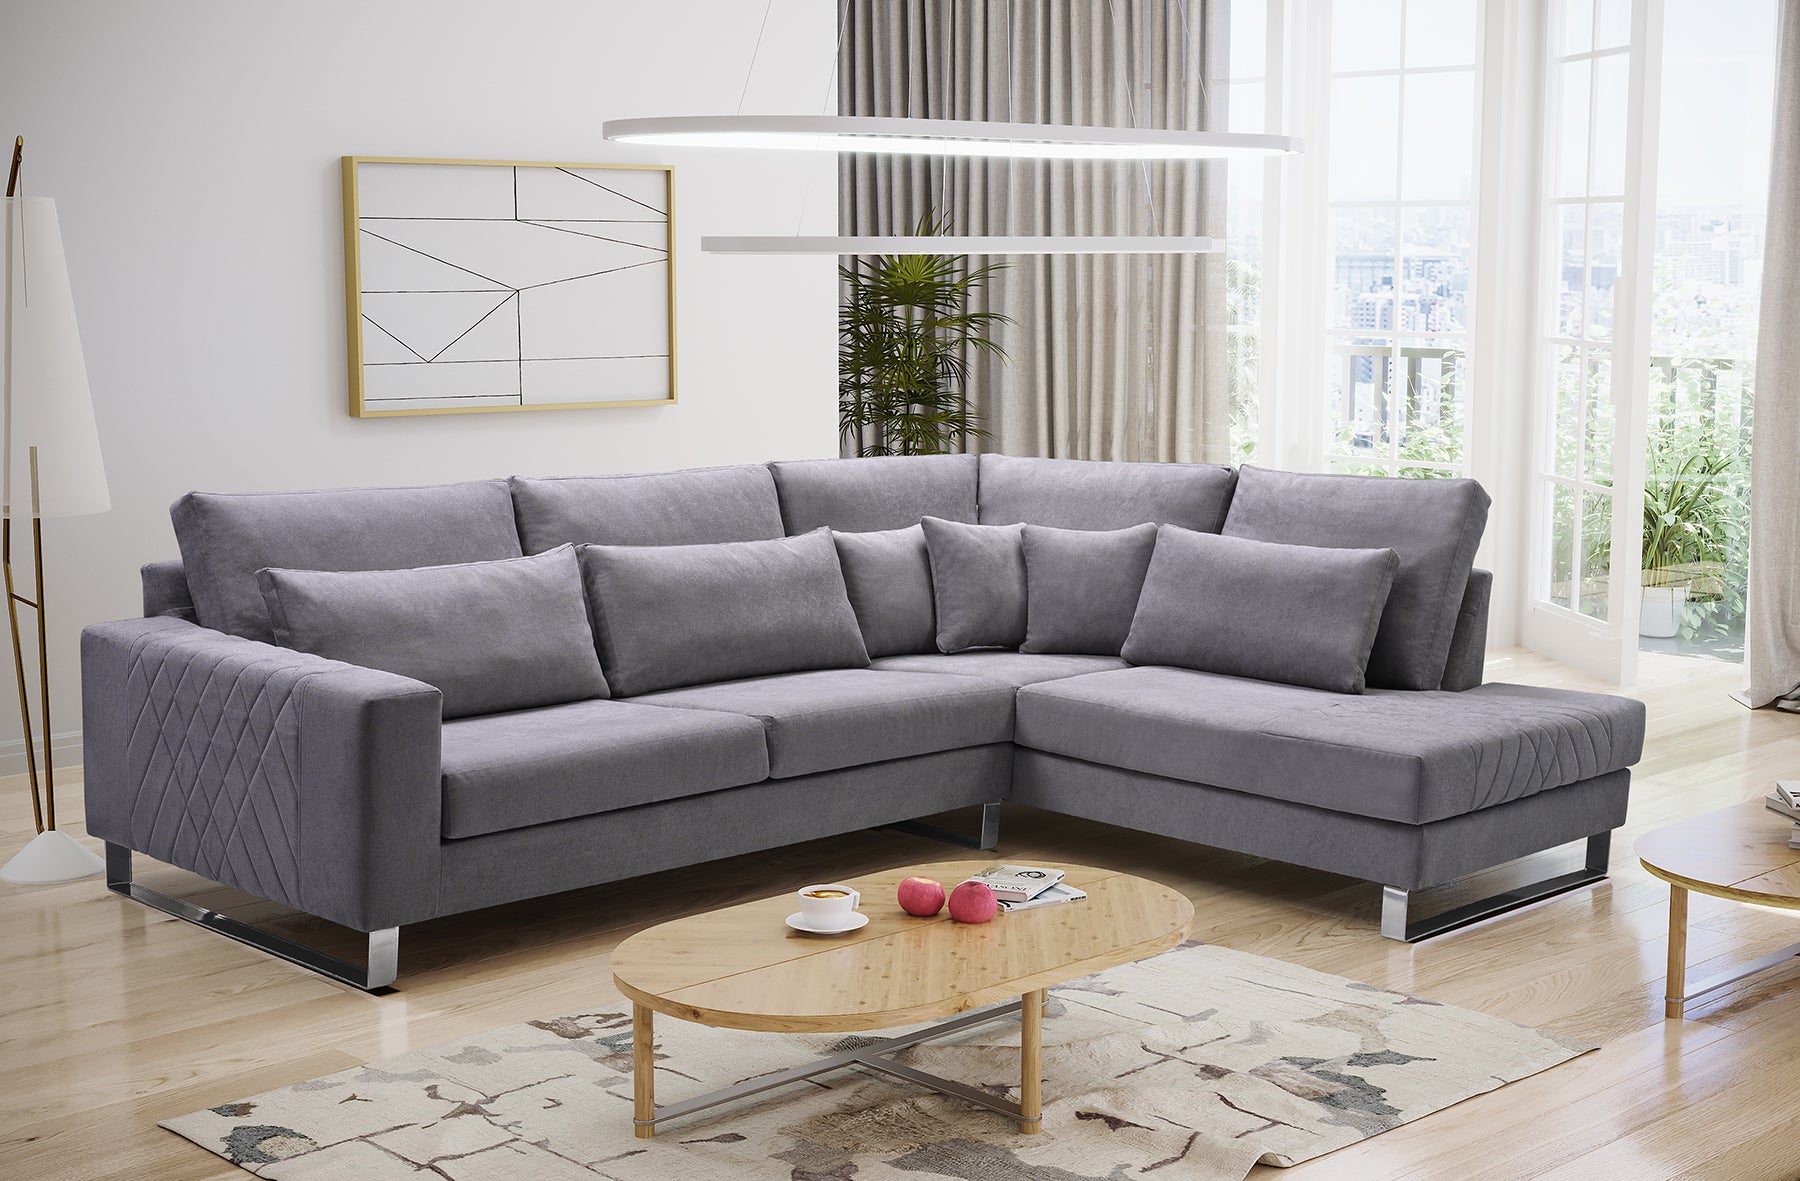 CORNELIA - Elegant Corner Sofa with beautiful design and chrome legs & –  Wardrobe Bunk Bed Sofa